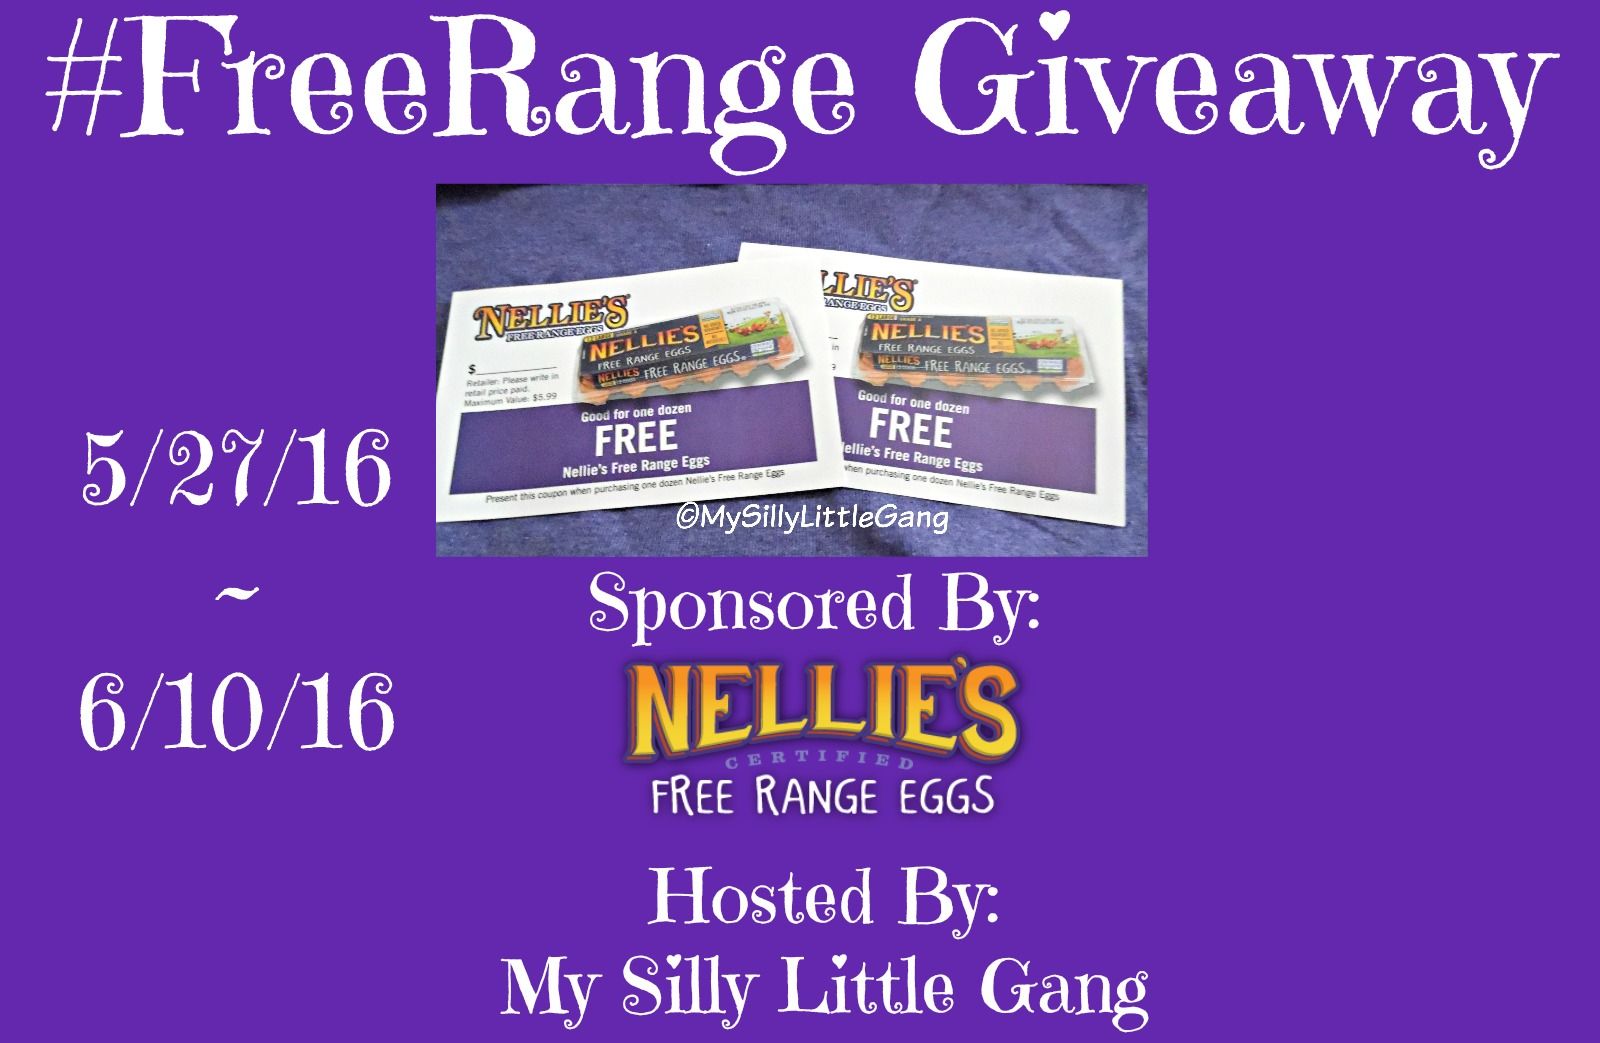 Nellie's Free Range Giveaway